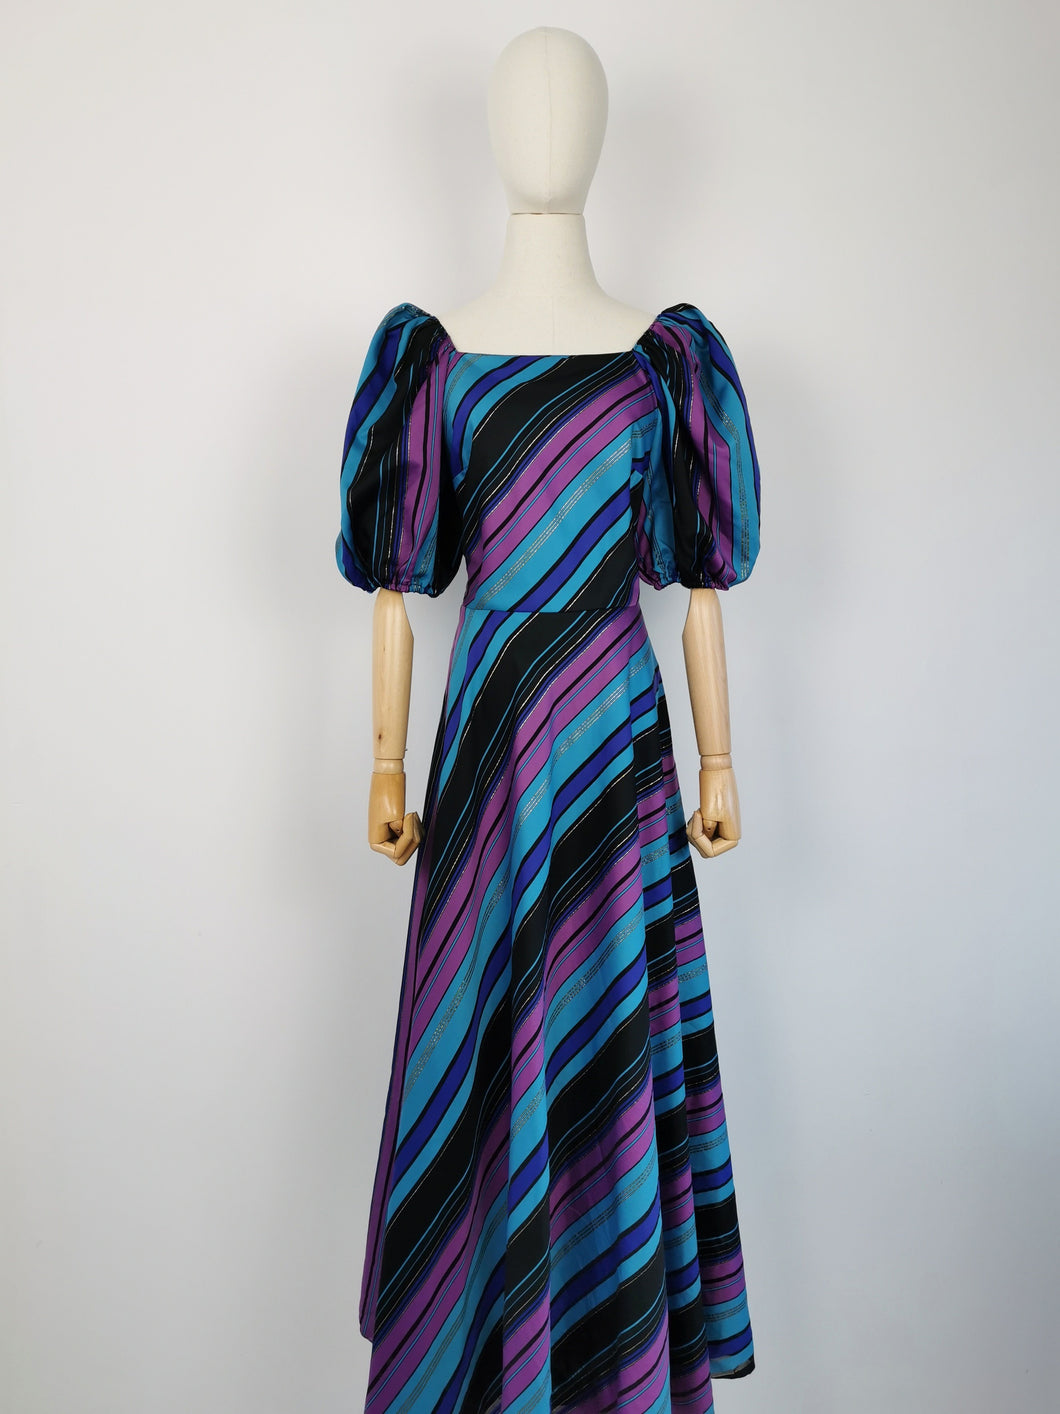 Vintage 80s striped taffeta dress